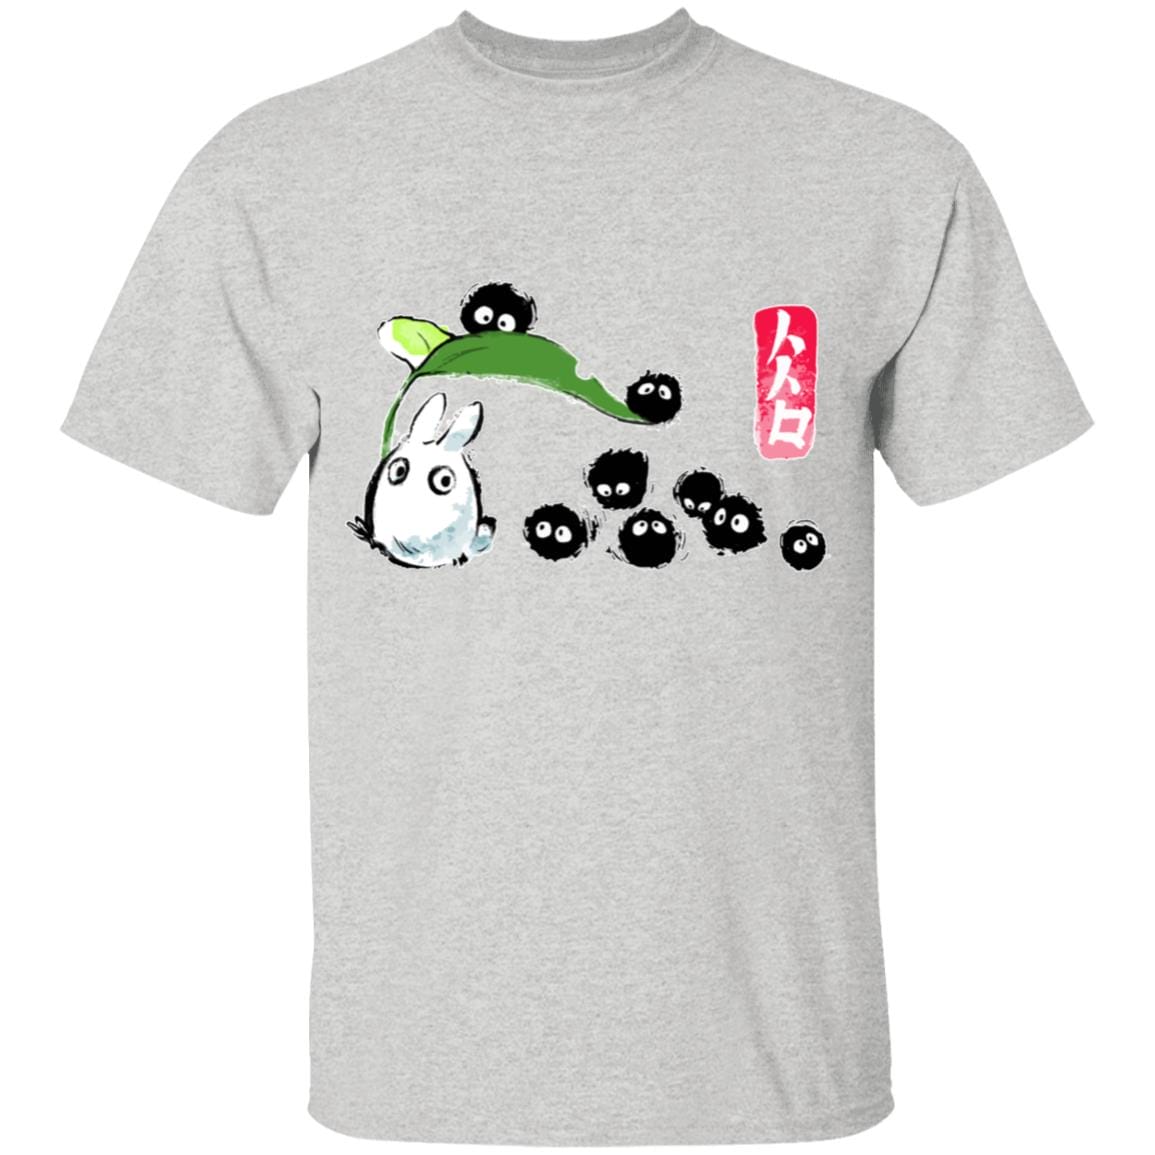 Mini Totoro and the Soot Balls T Shirt for Kid Ghibli Store ghibli.store